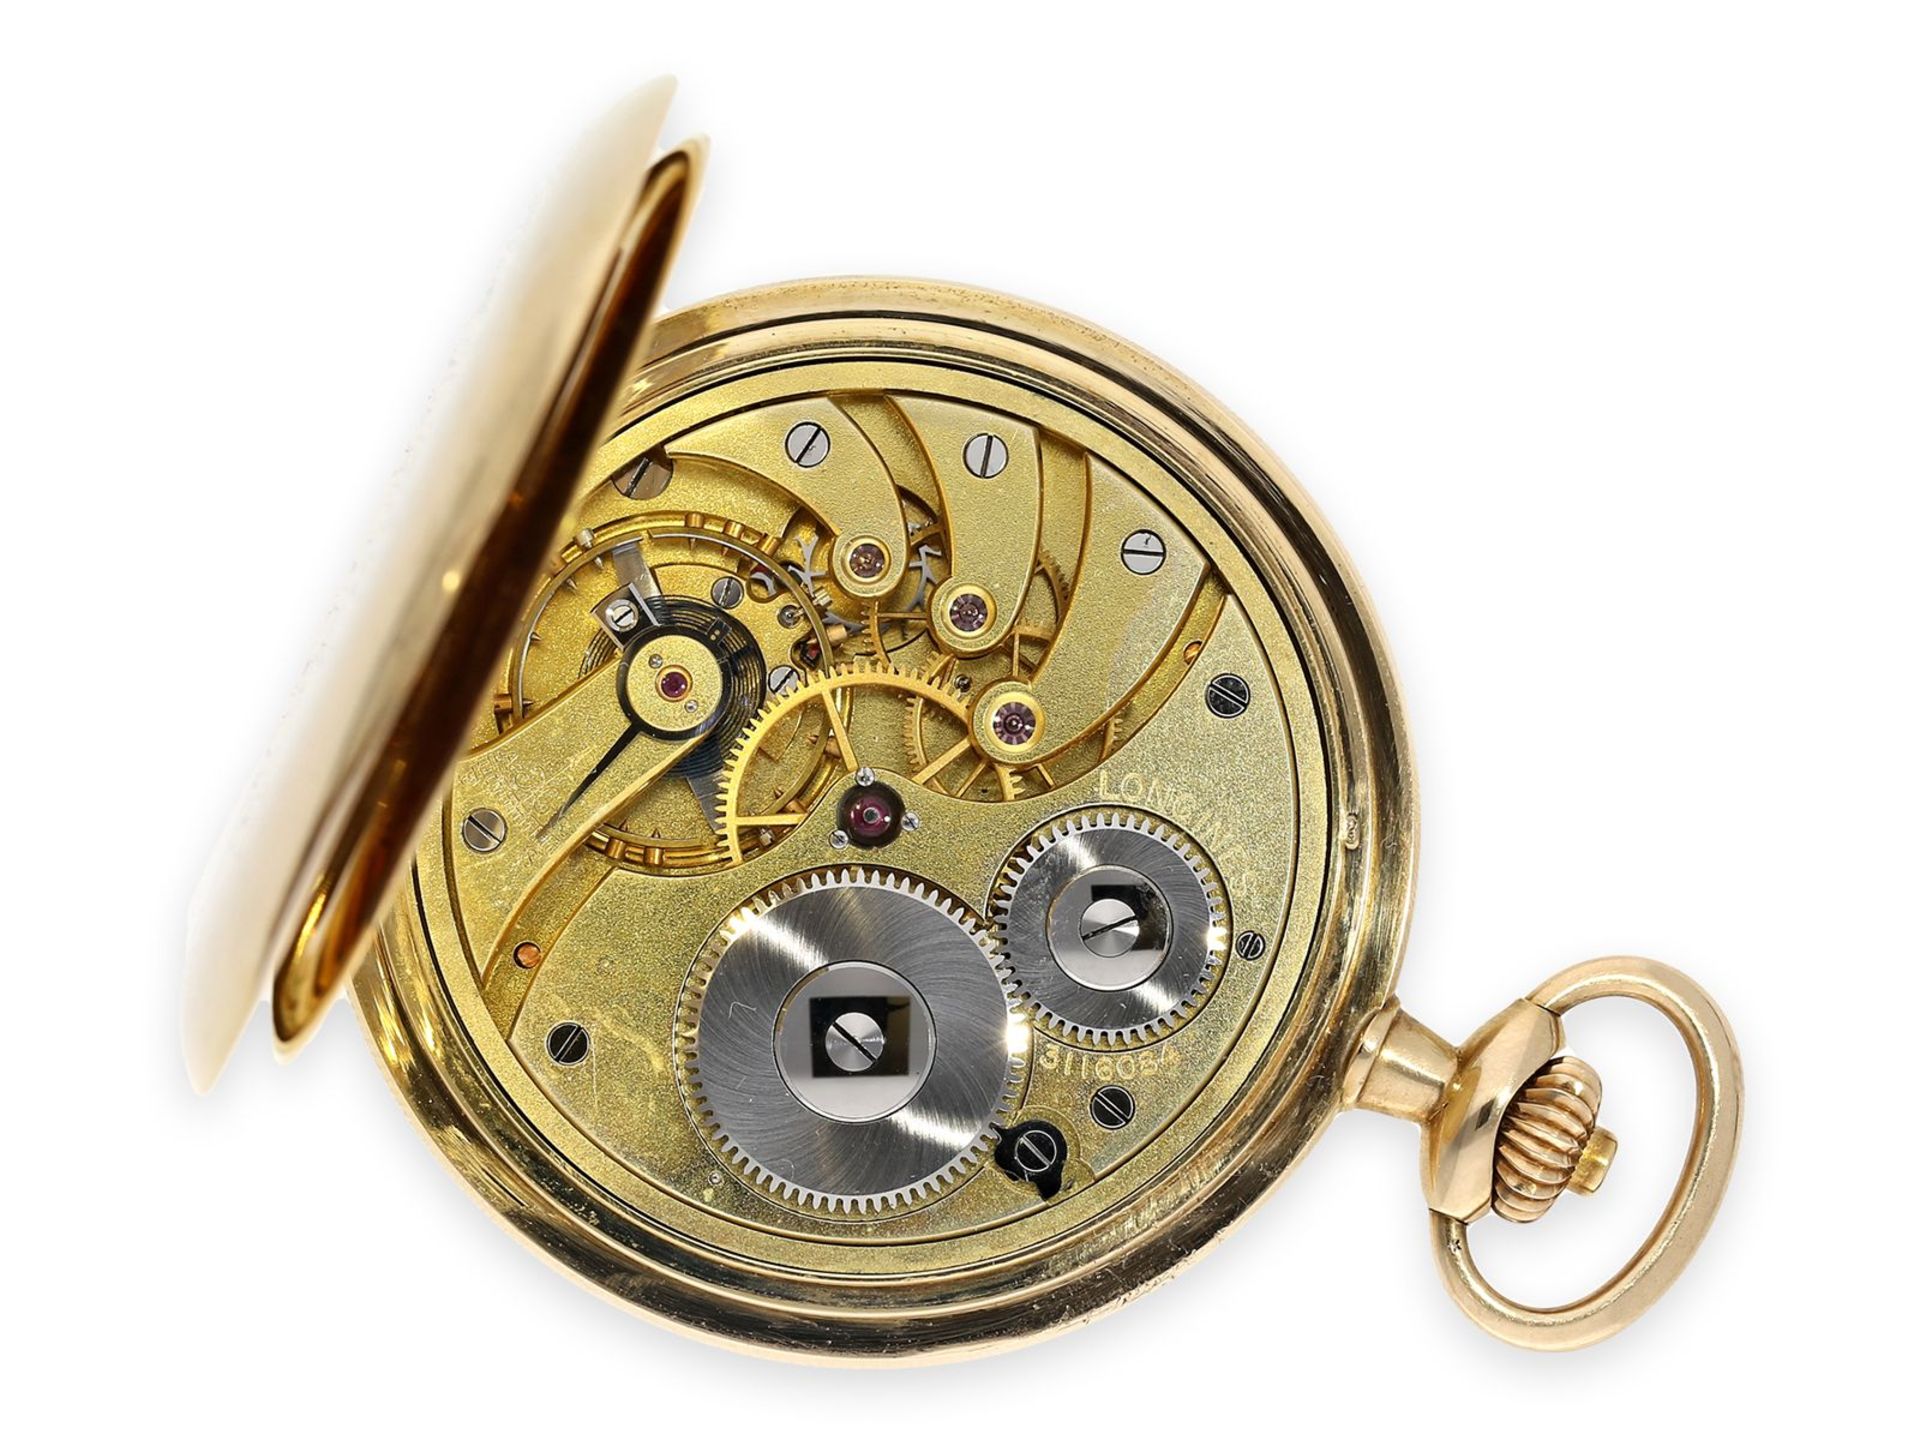 Taschenuhr: qualitätsvolle Goldsavonnette der Marke Longines, Ankerchronometer Kaliber 19.80, ca. - Image 2 of 7